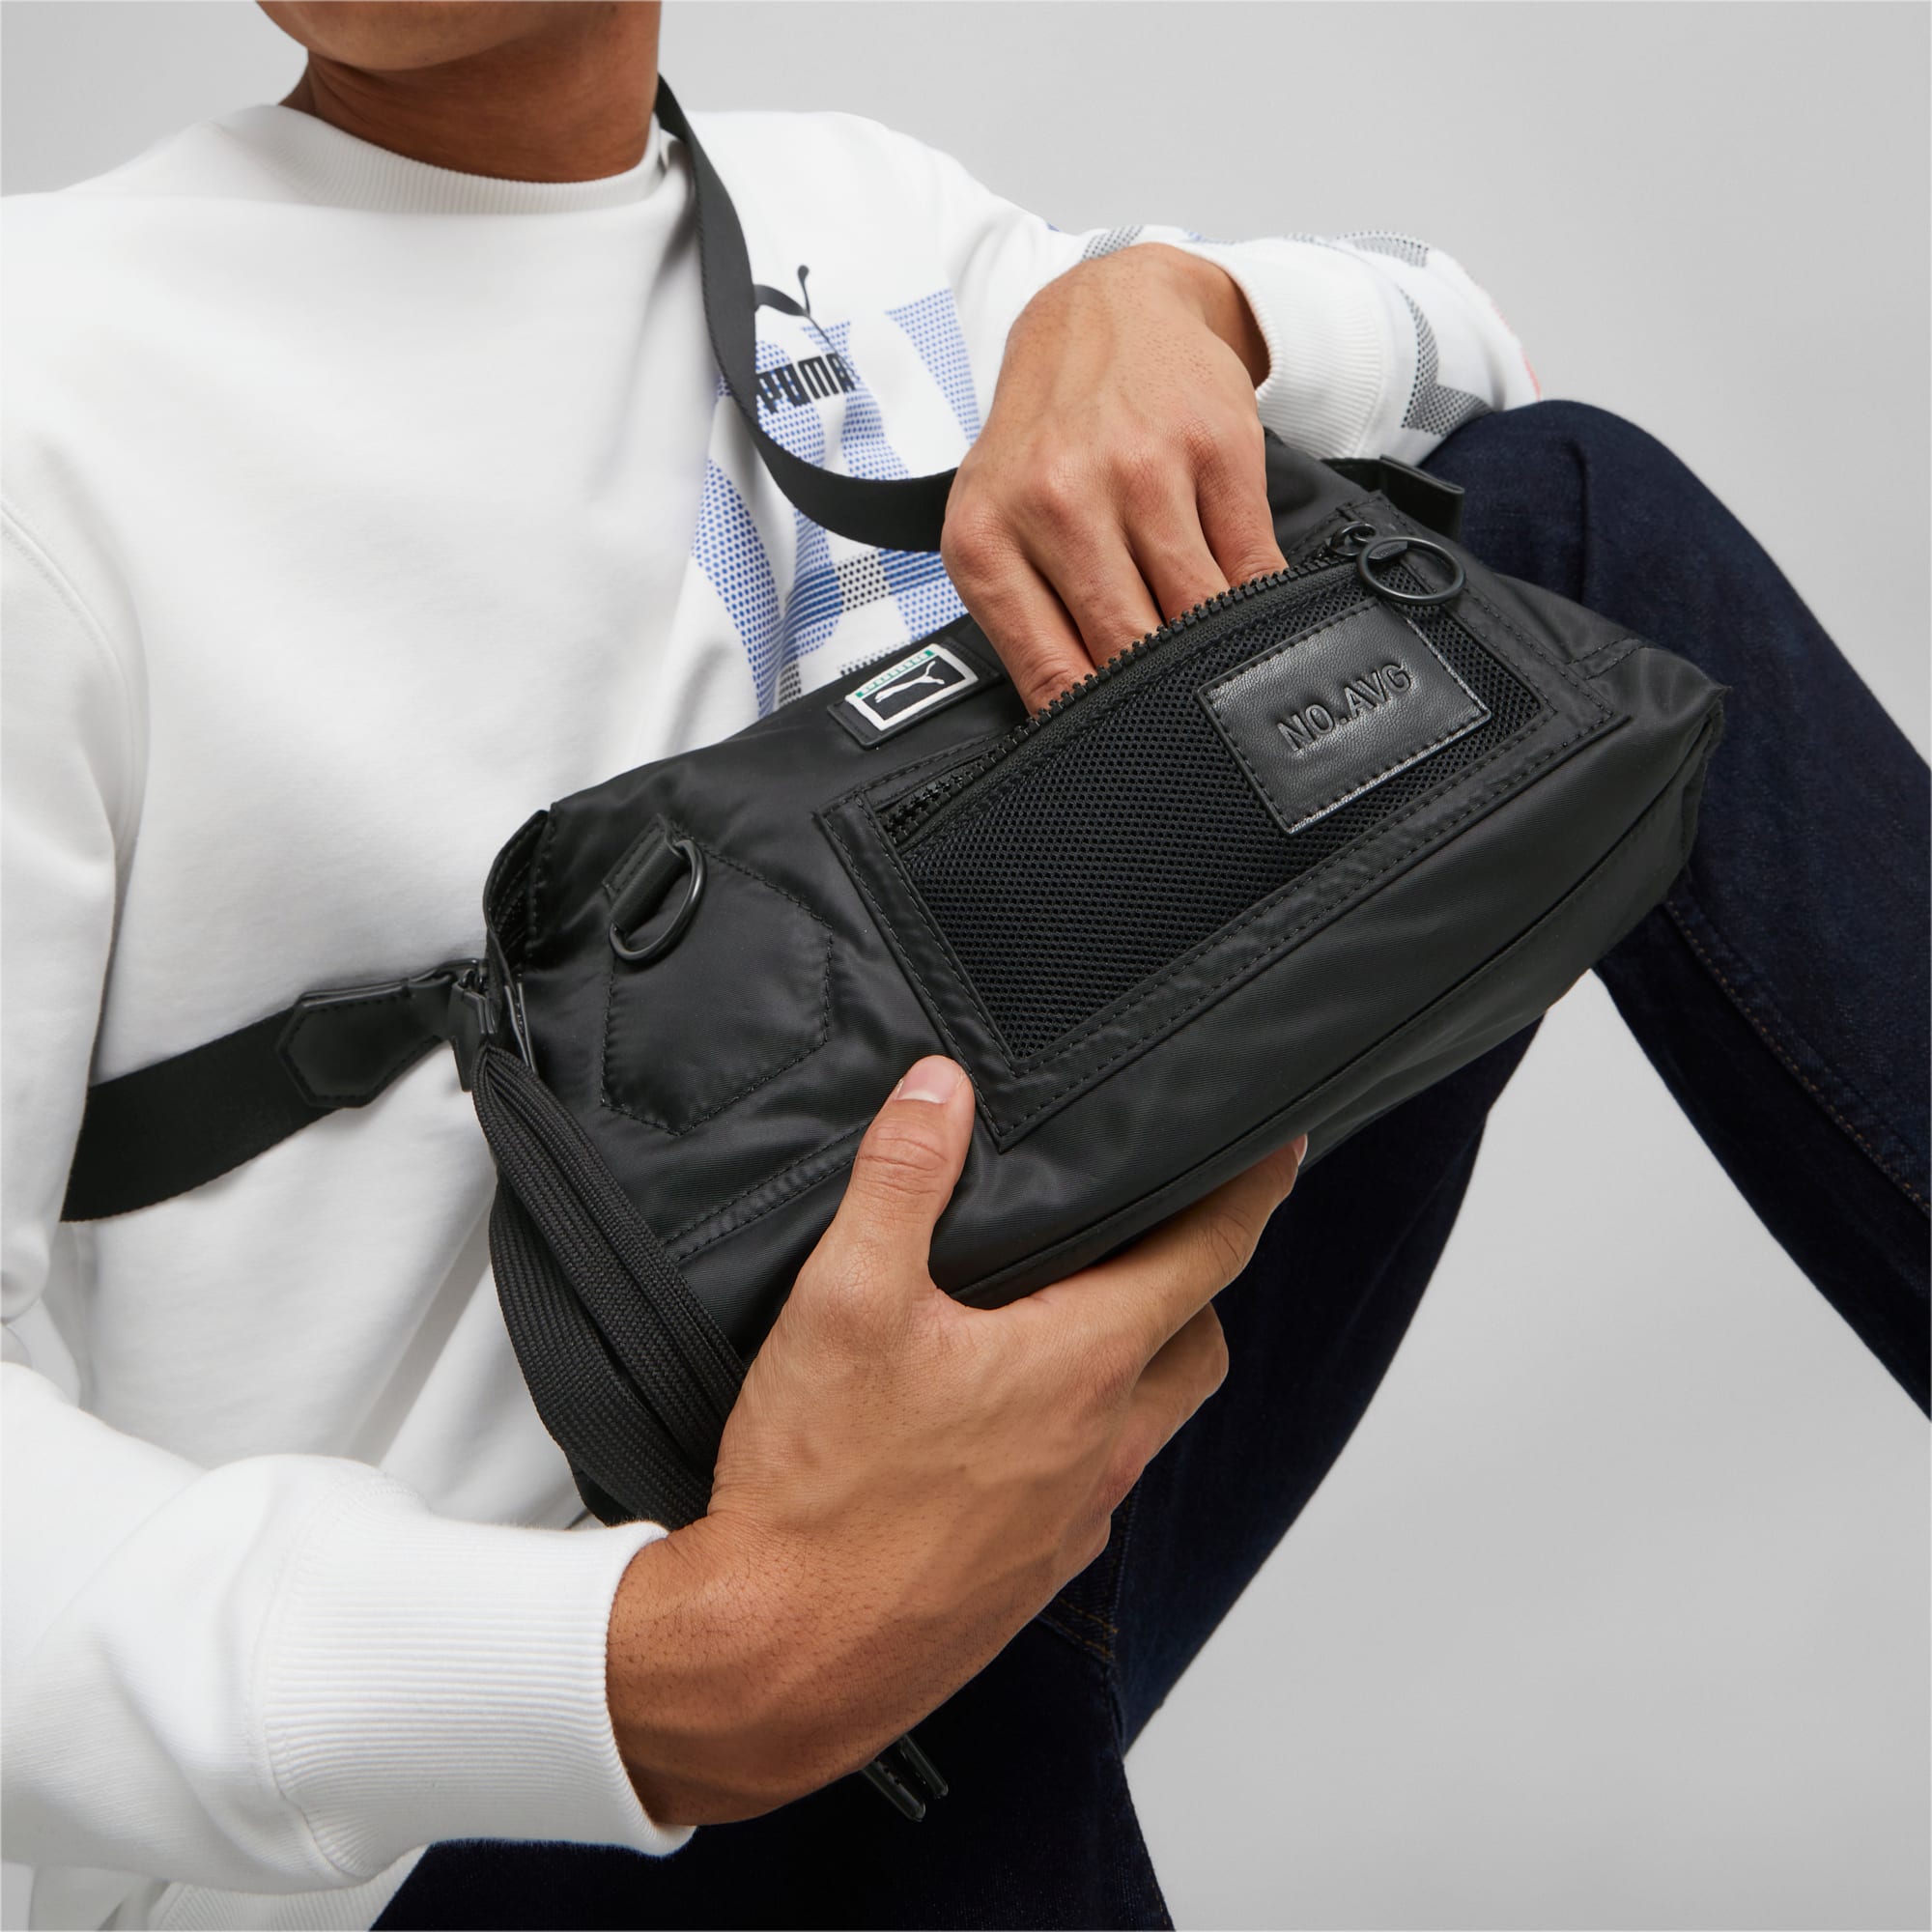 Louis Vuitton Medium Crossbody Bags & Handbags for Women